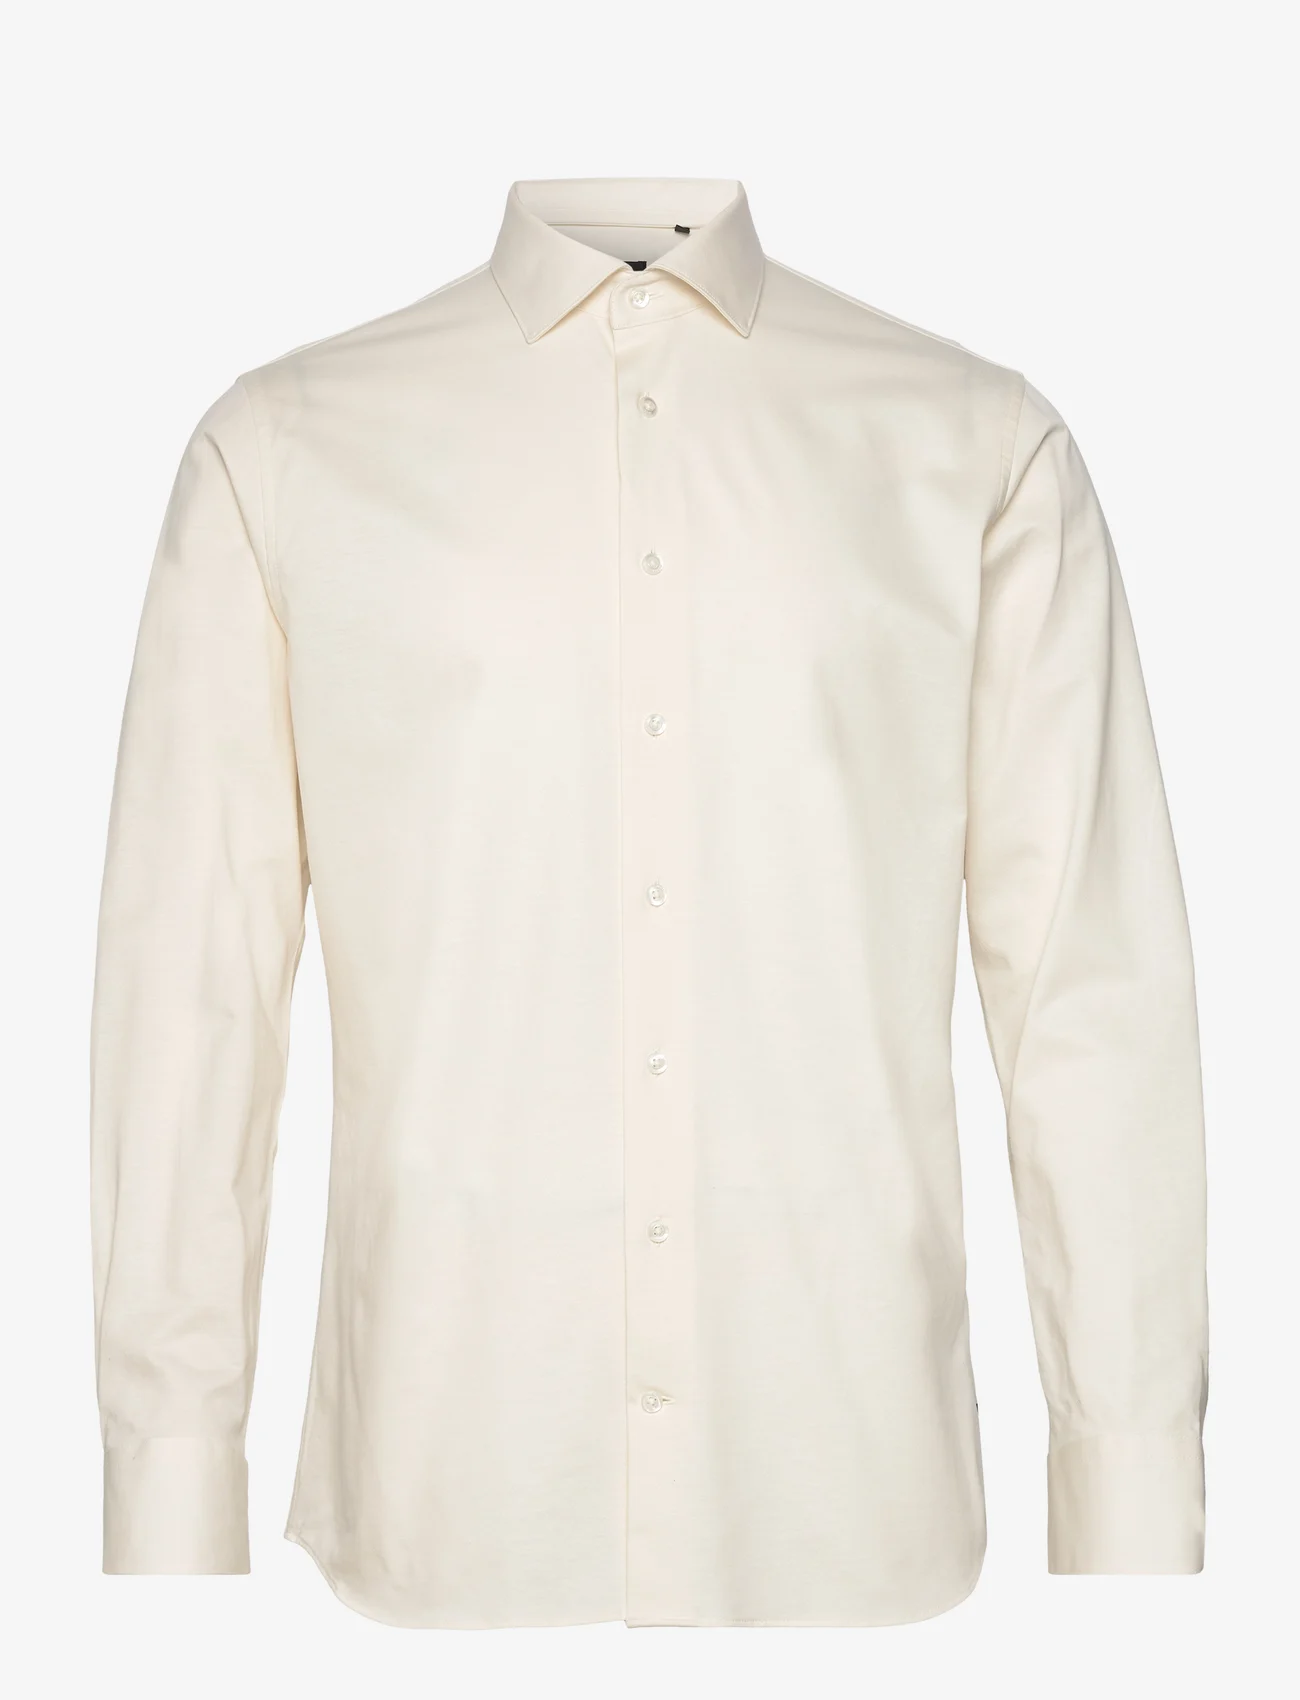 Matinique - MAmarc N - basic shirts - white - 0